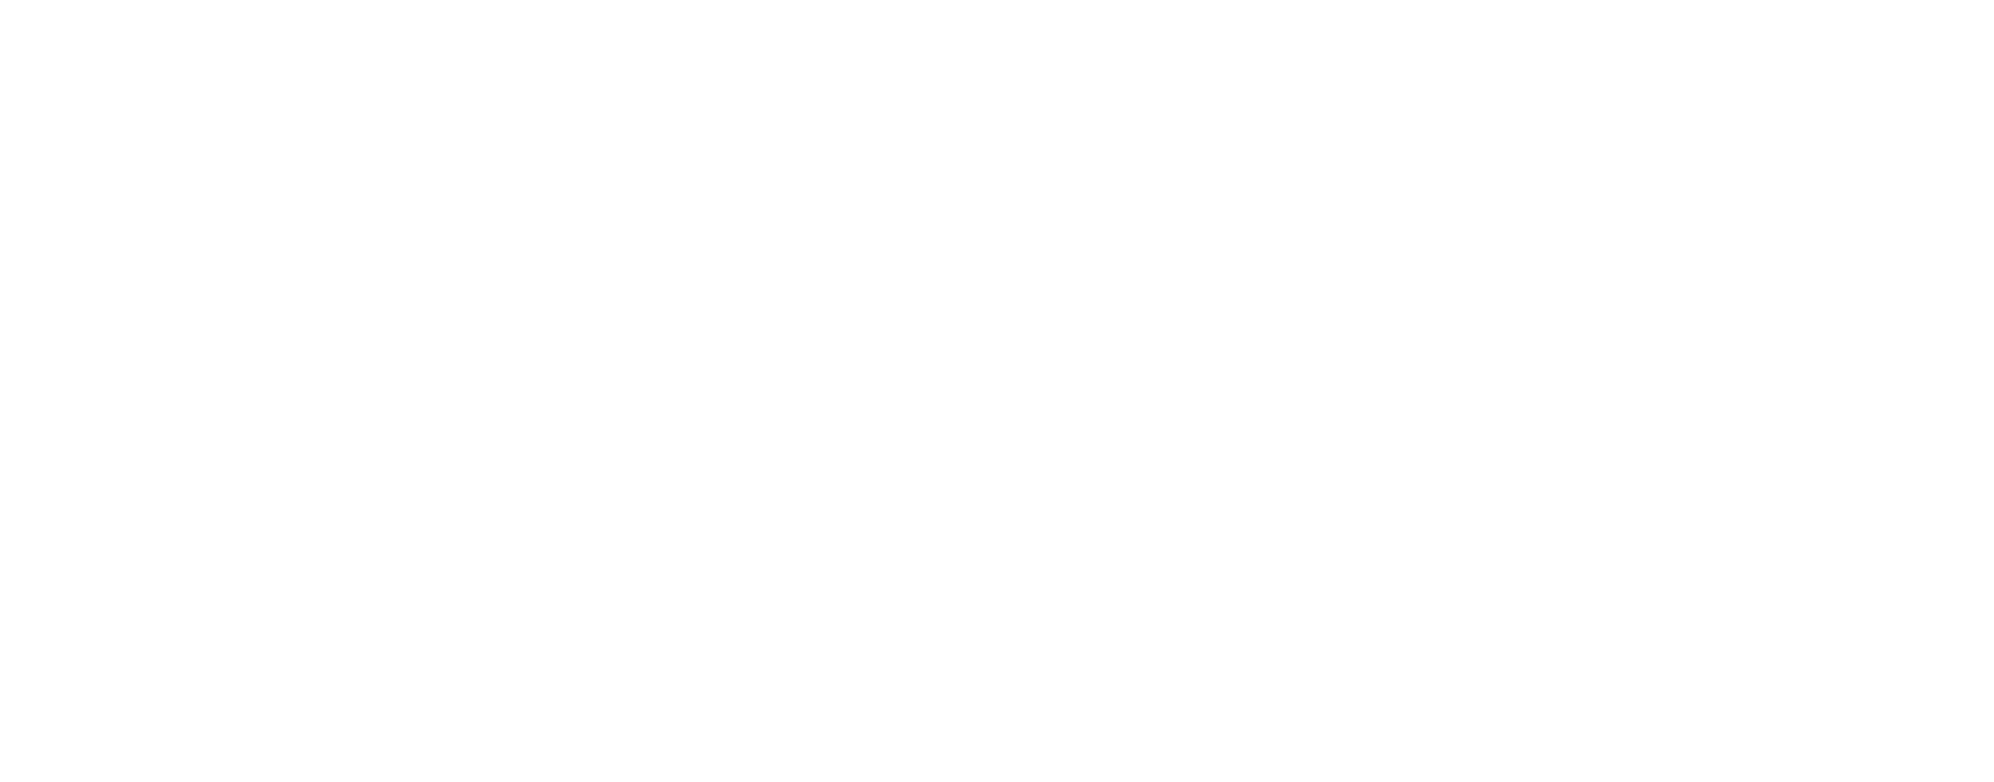 OpenFF Toolkit 0.13.0+11.ga131add1.dirty documentation logo